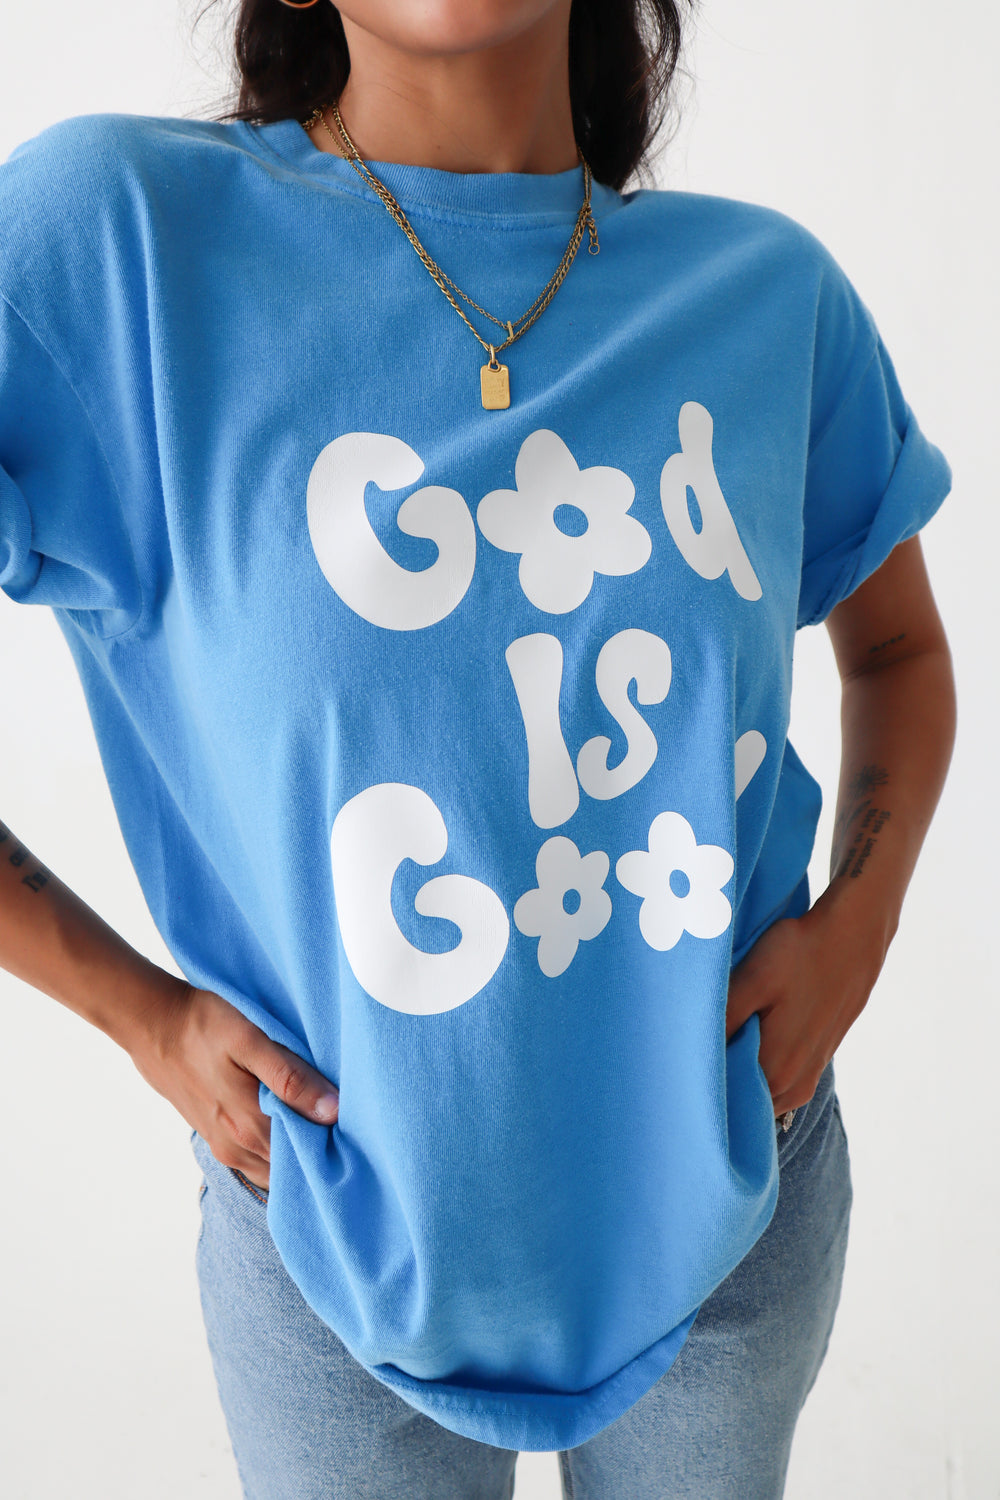 God Is Good Shirt